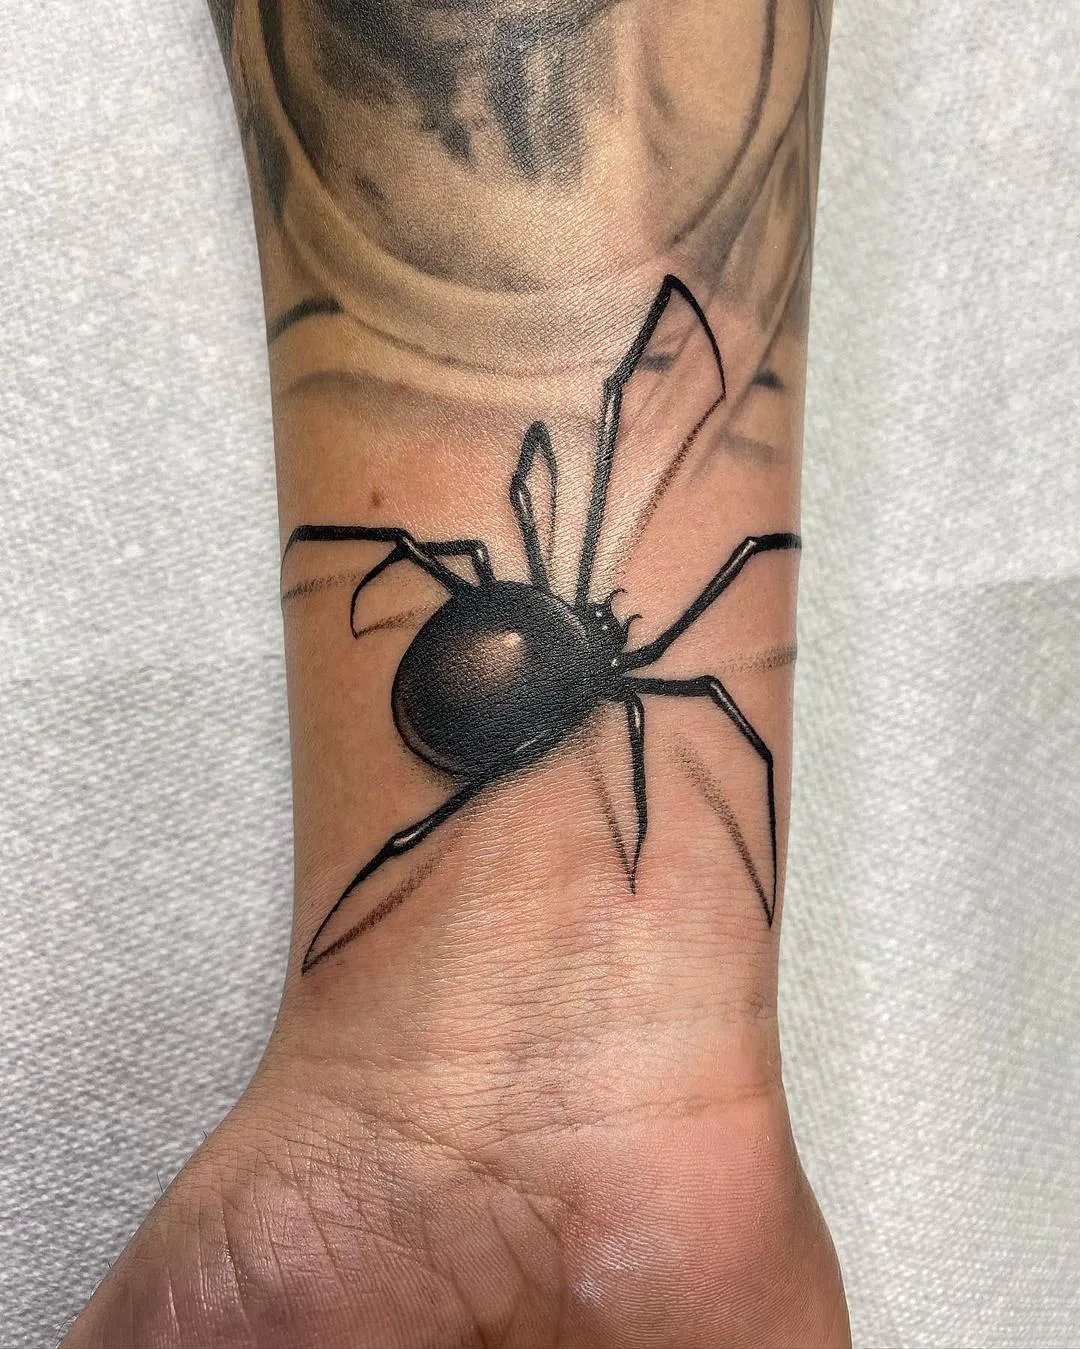 Black widow spider tattoo 5